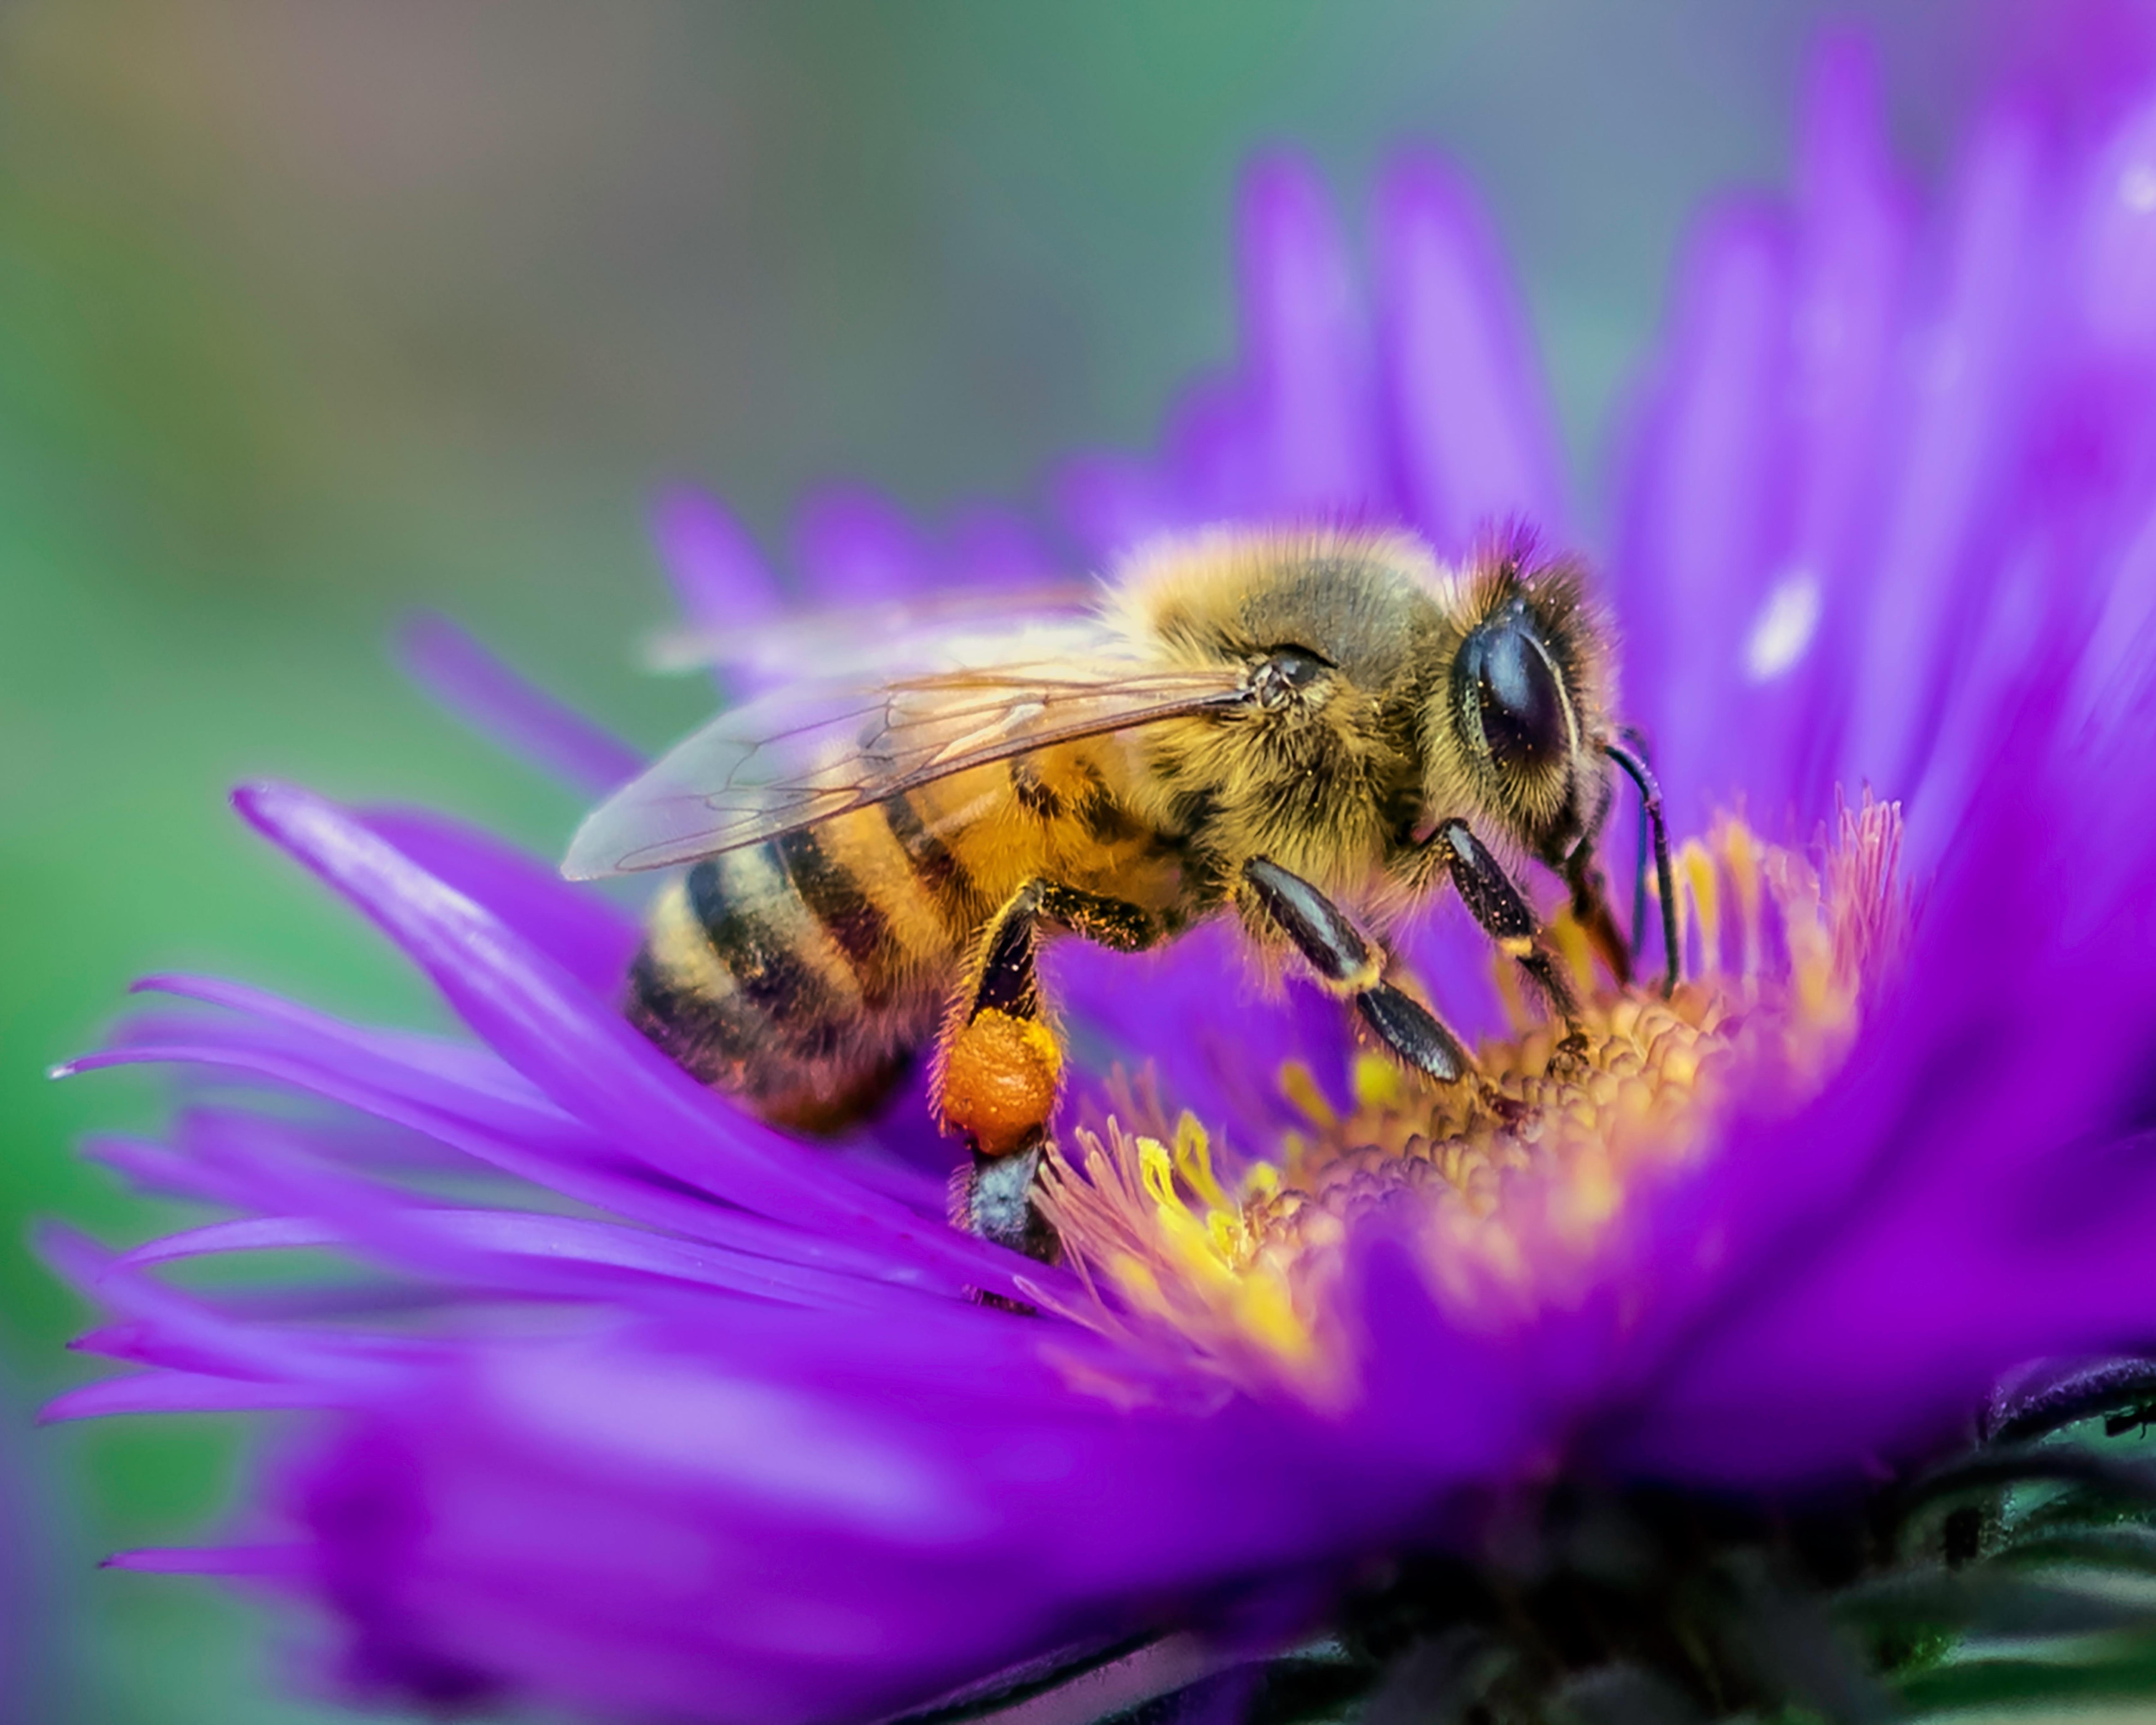 Házlo por las abejas: Elige cosmética ecológica sin pesticidas